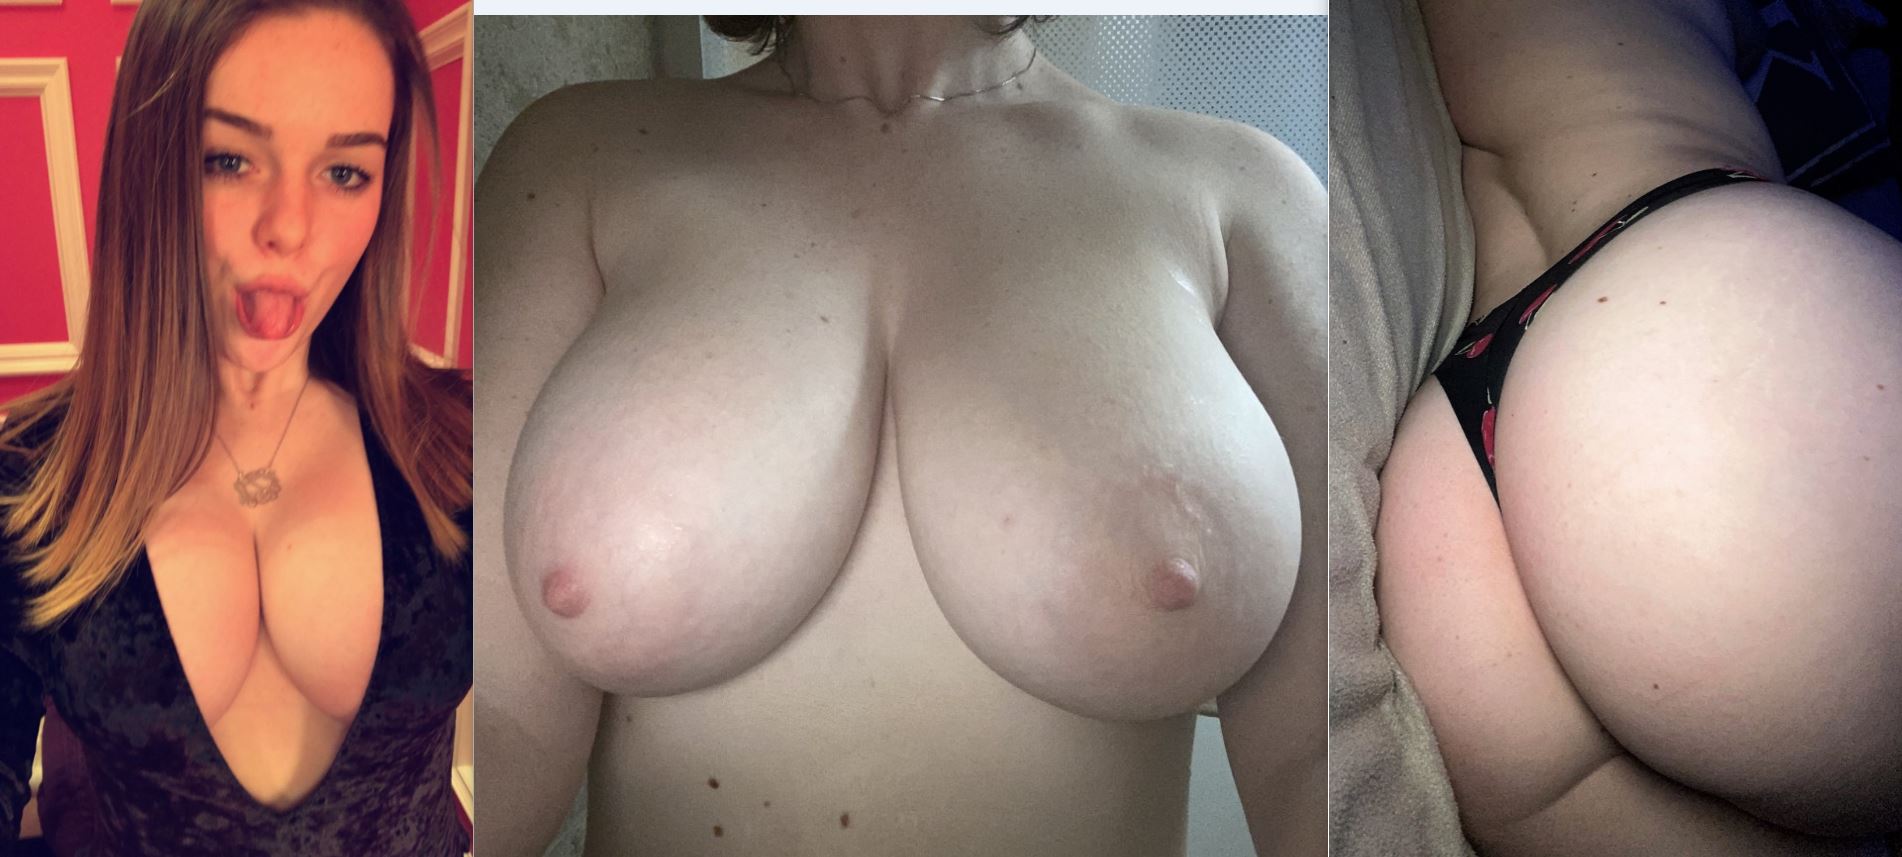 Allison college slut with big tits